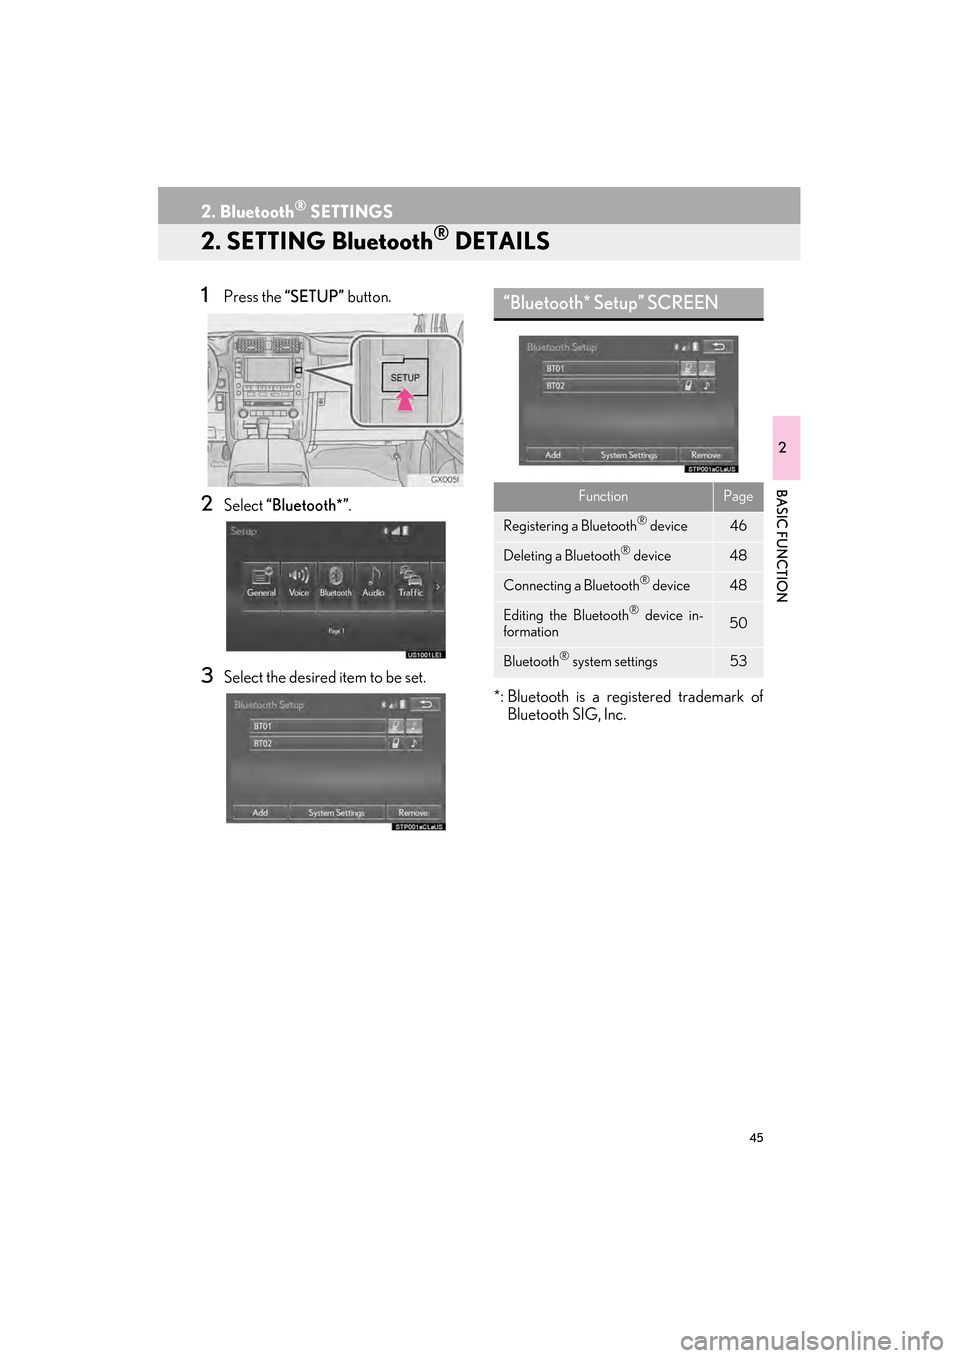 Lexus GX460 2015  Navigation Manual 45
2. Bluetooth® SETTINGS
GX460_Navi_OM60L77U_(U)14.06.02     10:48
2
BASIC FUNCTION
2. SETTING Bluetooth® DETAILS
1Press the “SETUP” button.
2Select “Bluetooth*” .
3Select the desired item 